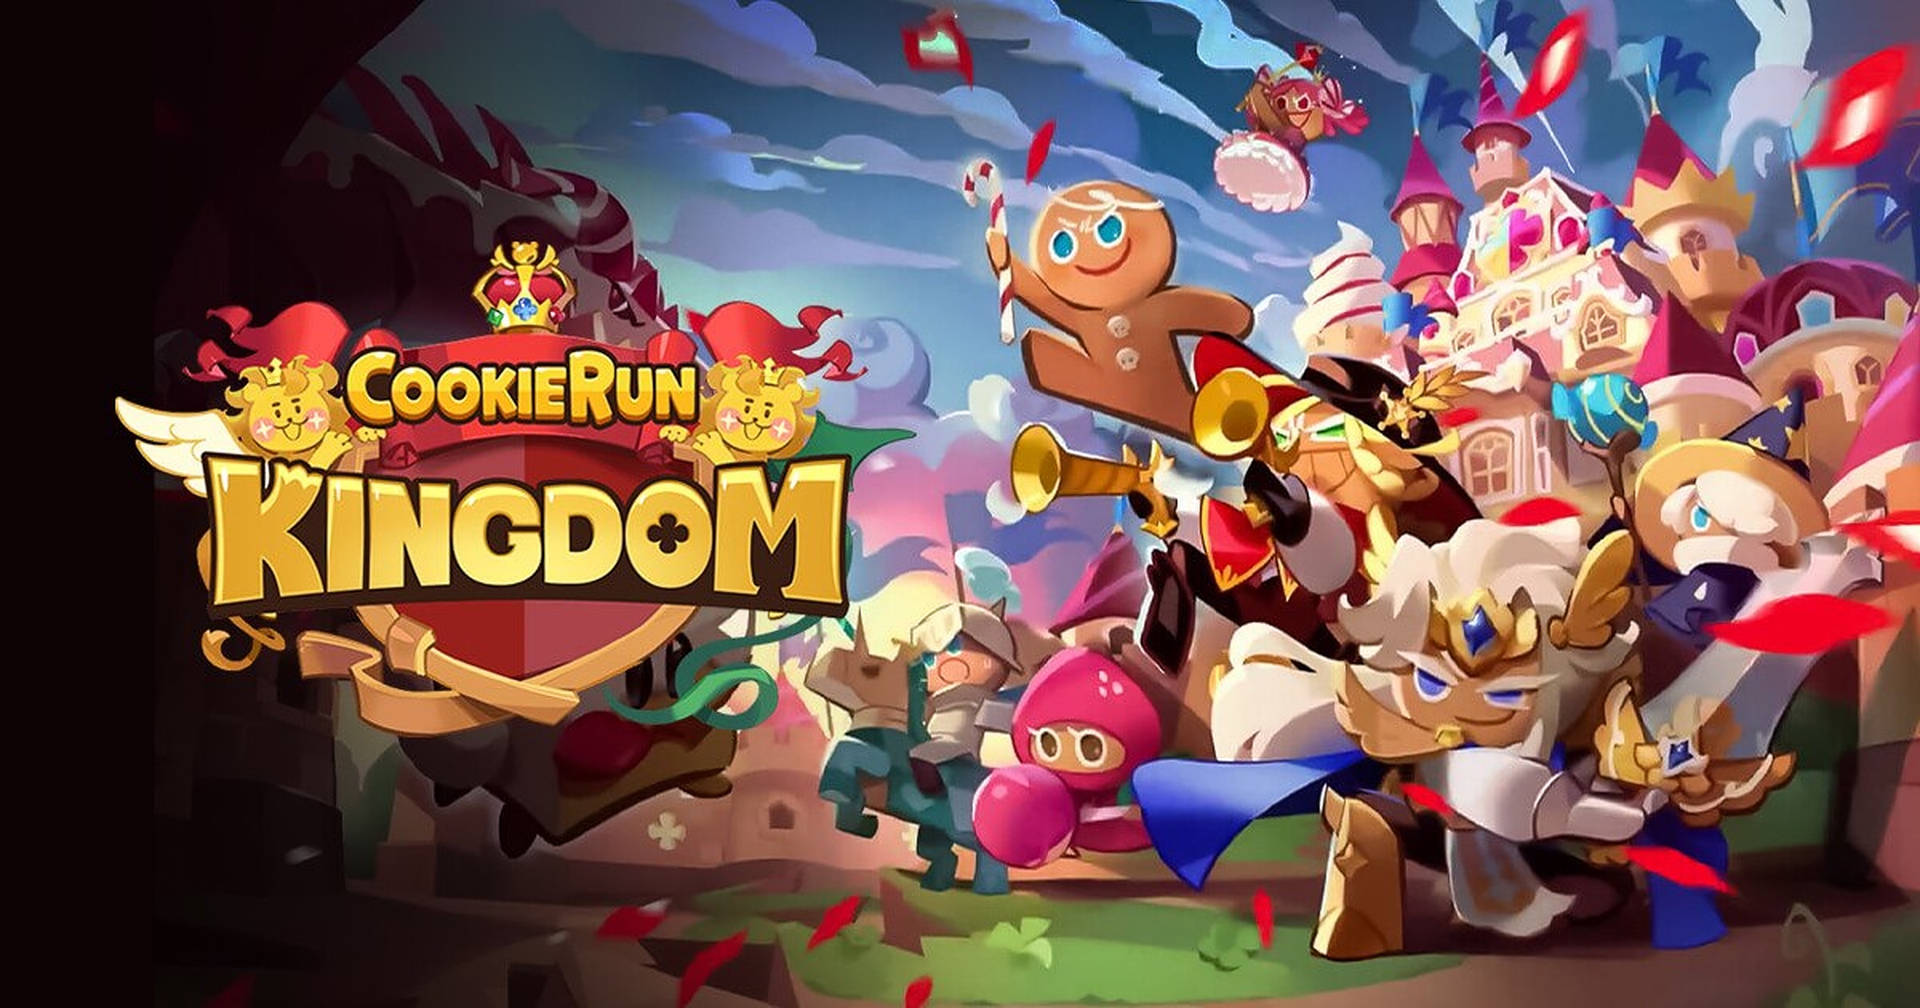 Cookie Run Kingdom Poster Background